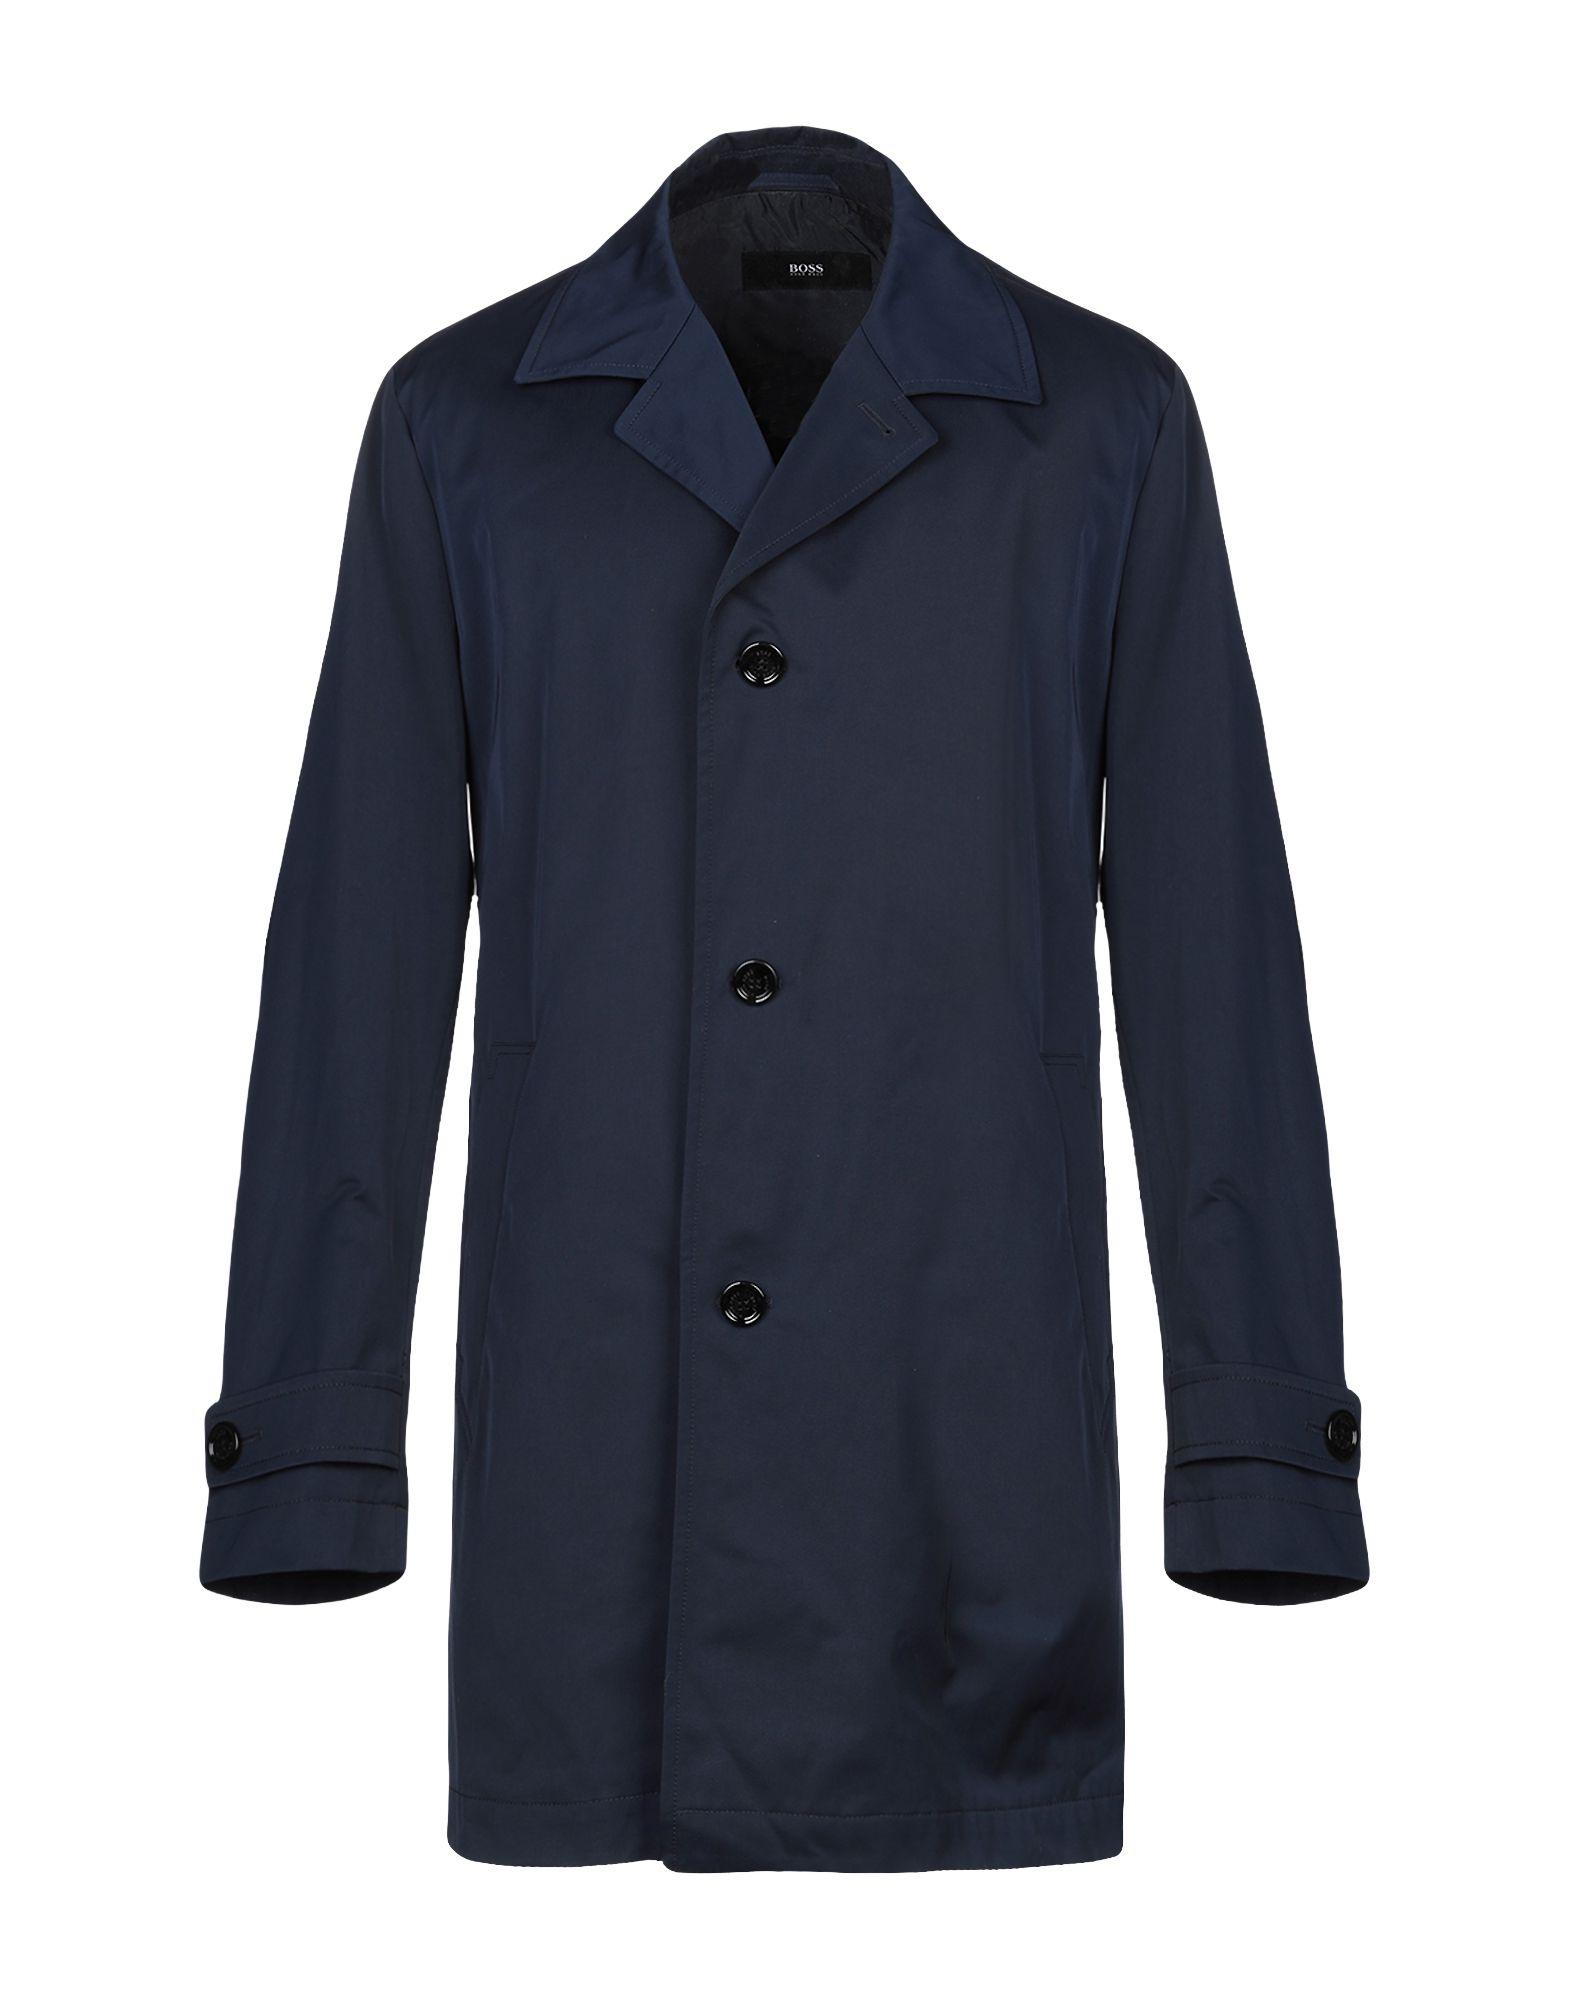 BOSS Synthetic Overcoat in Dark Blue (Blue) for Men - Lyst